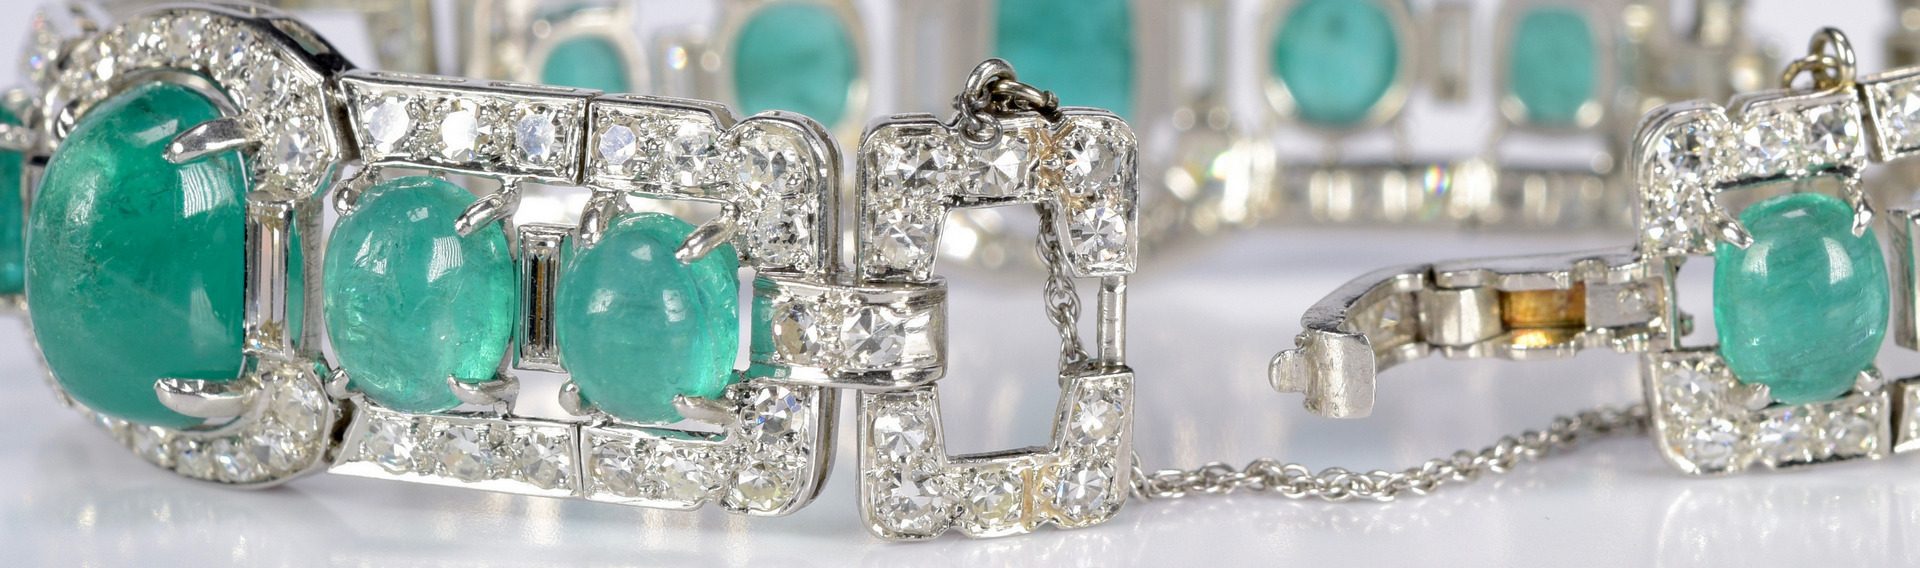 Lot 401: Art Deco Emerald and Diamond Bracelet